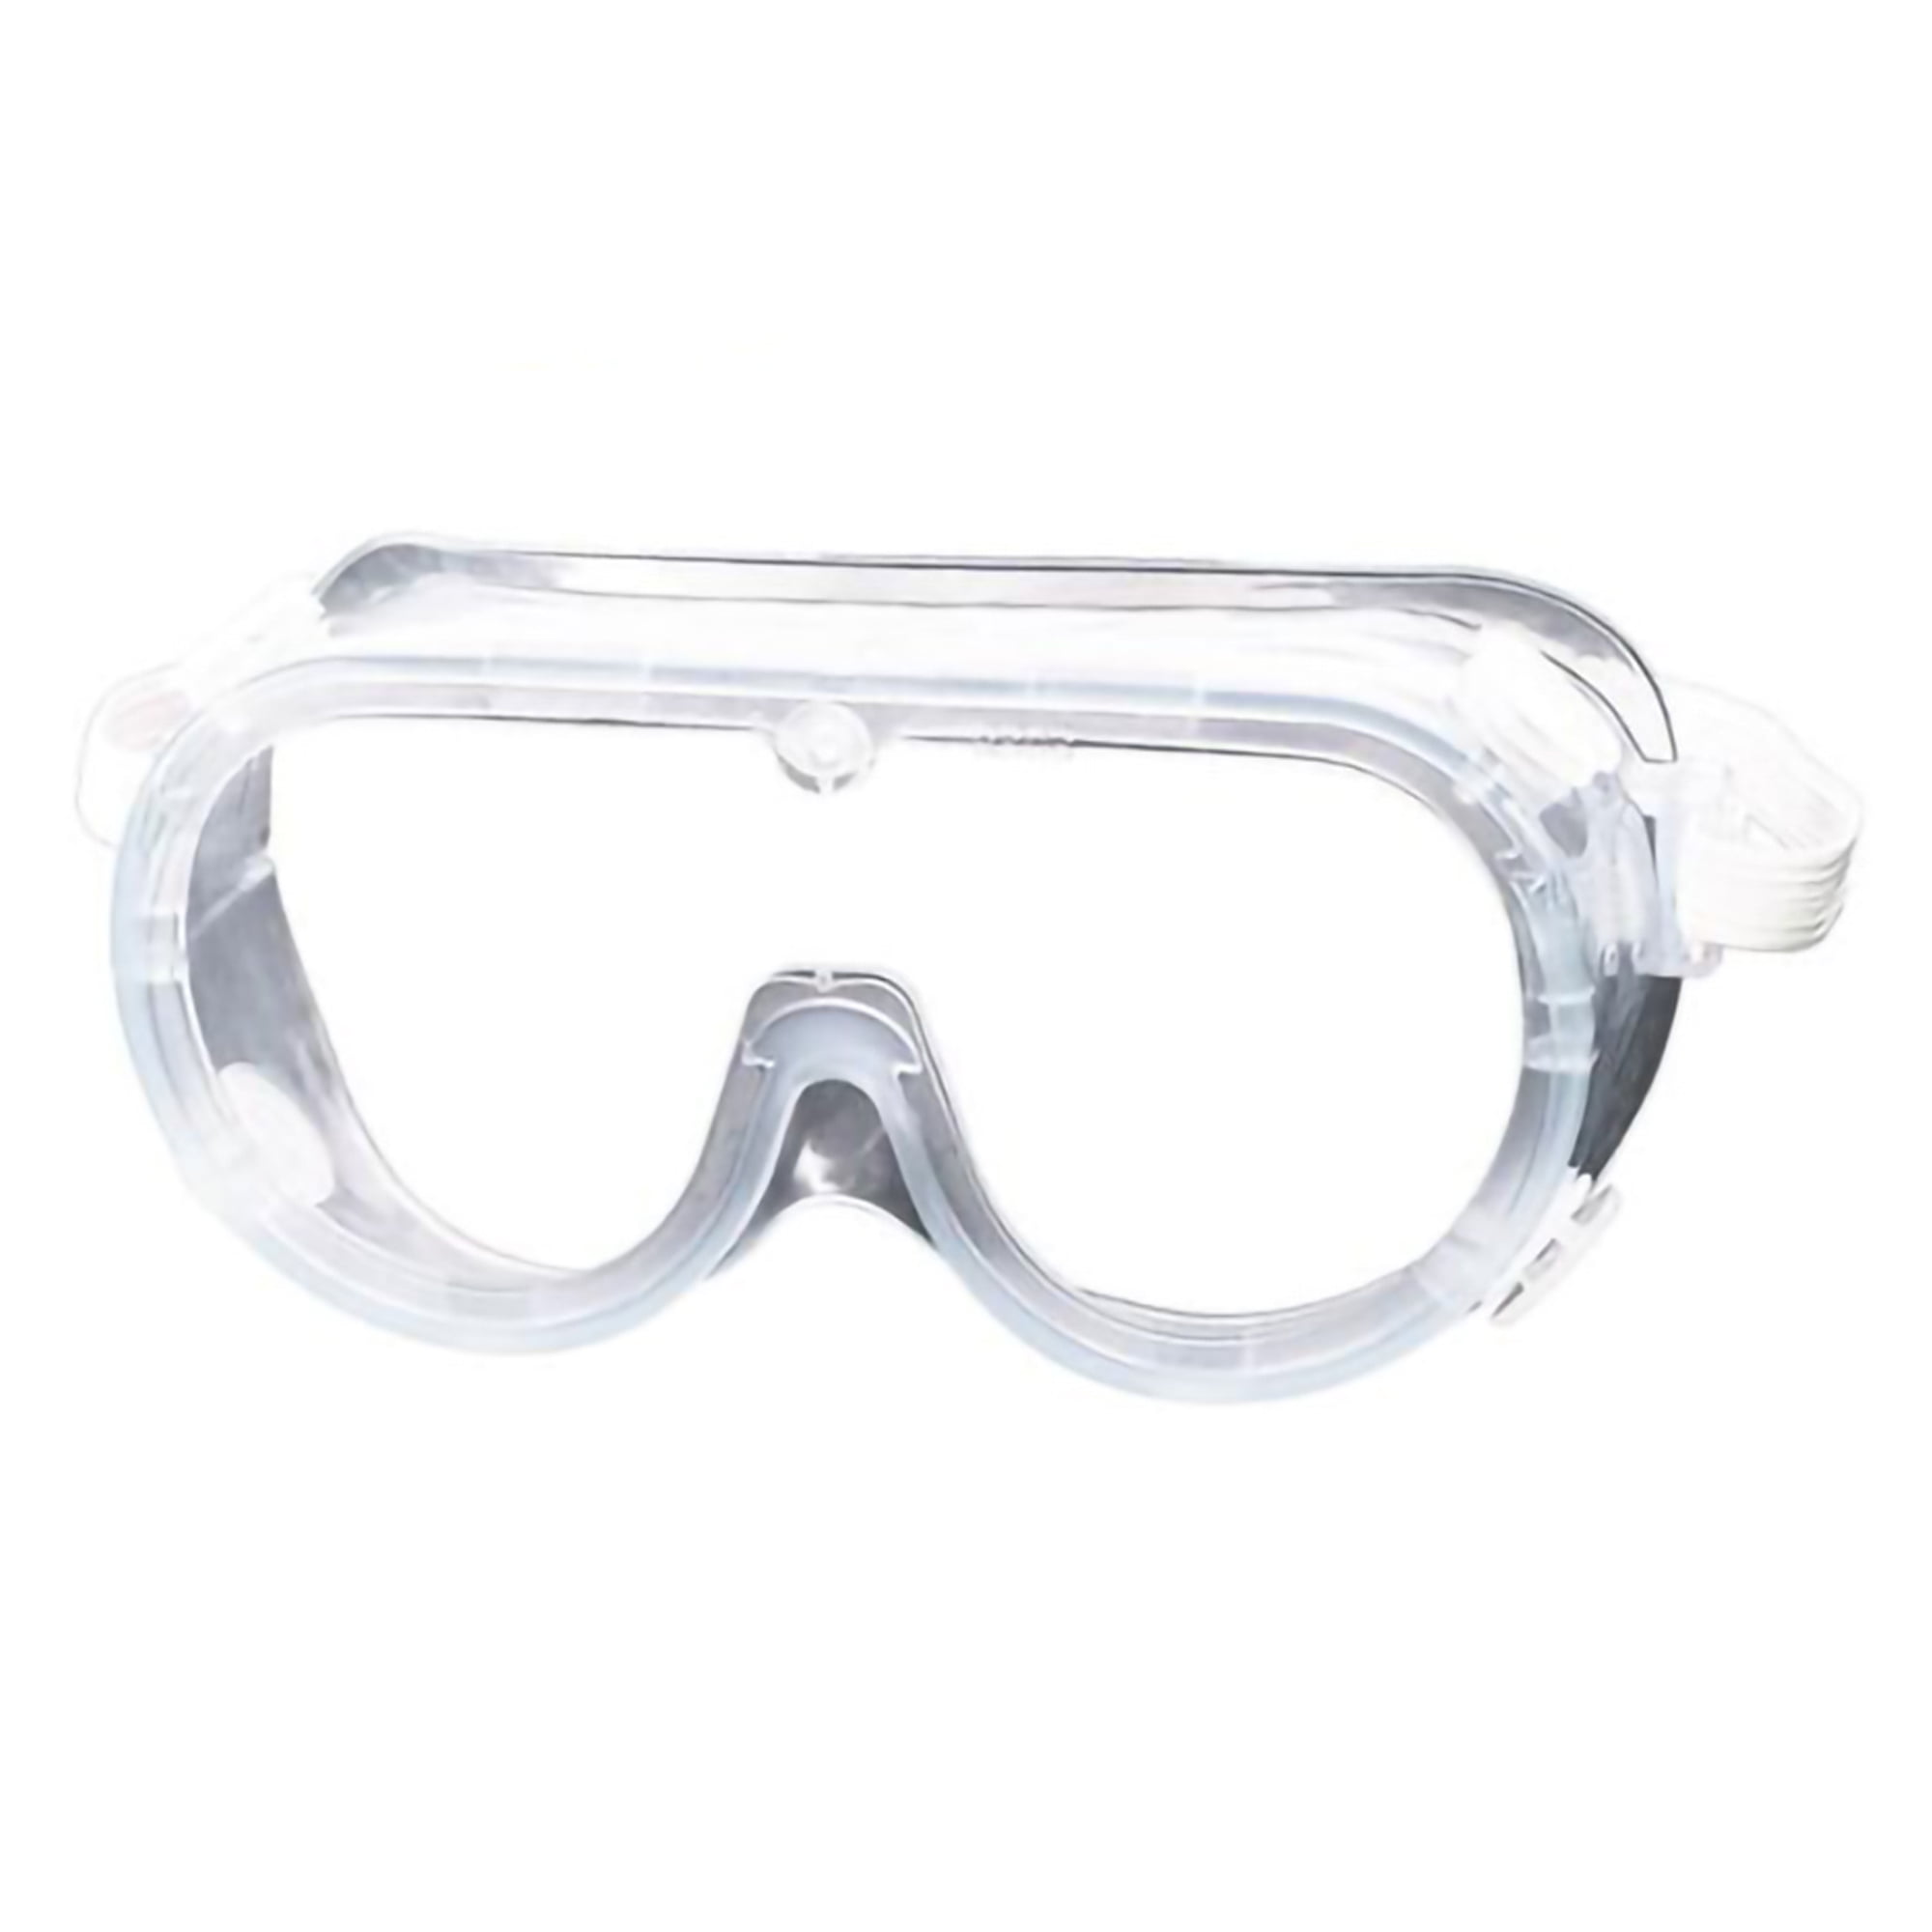 3PCS Safety Protective Eye Goggles Anti-fog Work Splash Proof Glasses Adjustable 